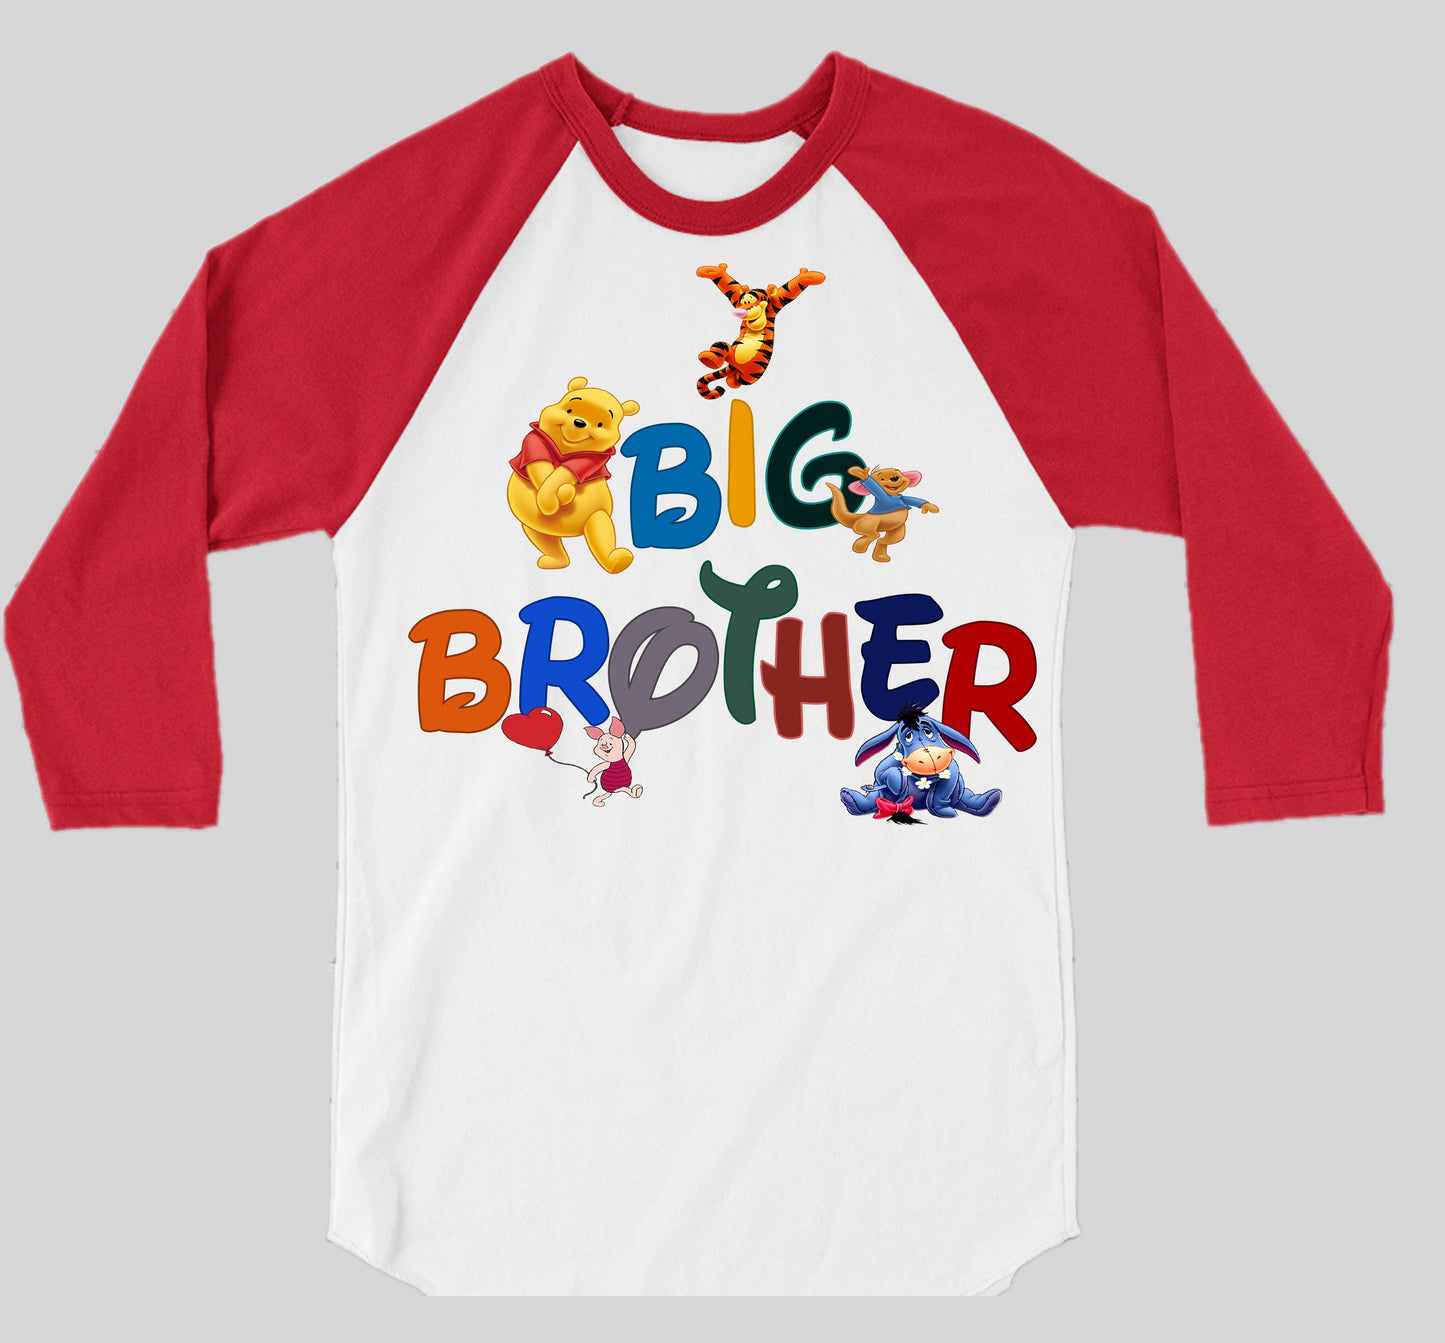 Big brother shirt Winnie  and Friends shirt. Winnie and friends Big brother shirt